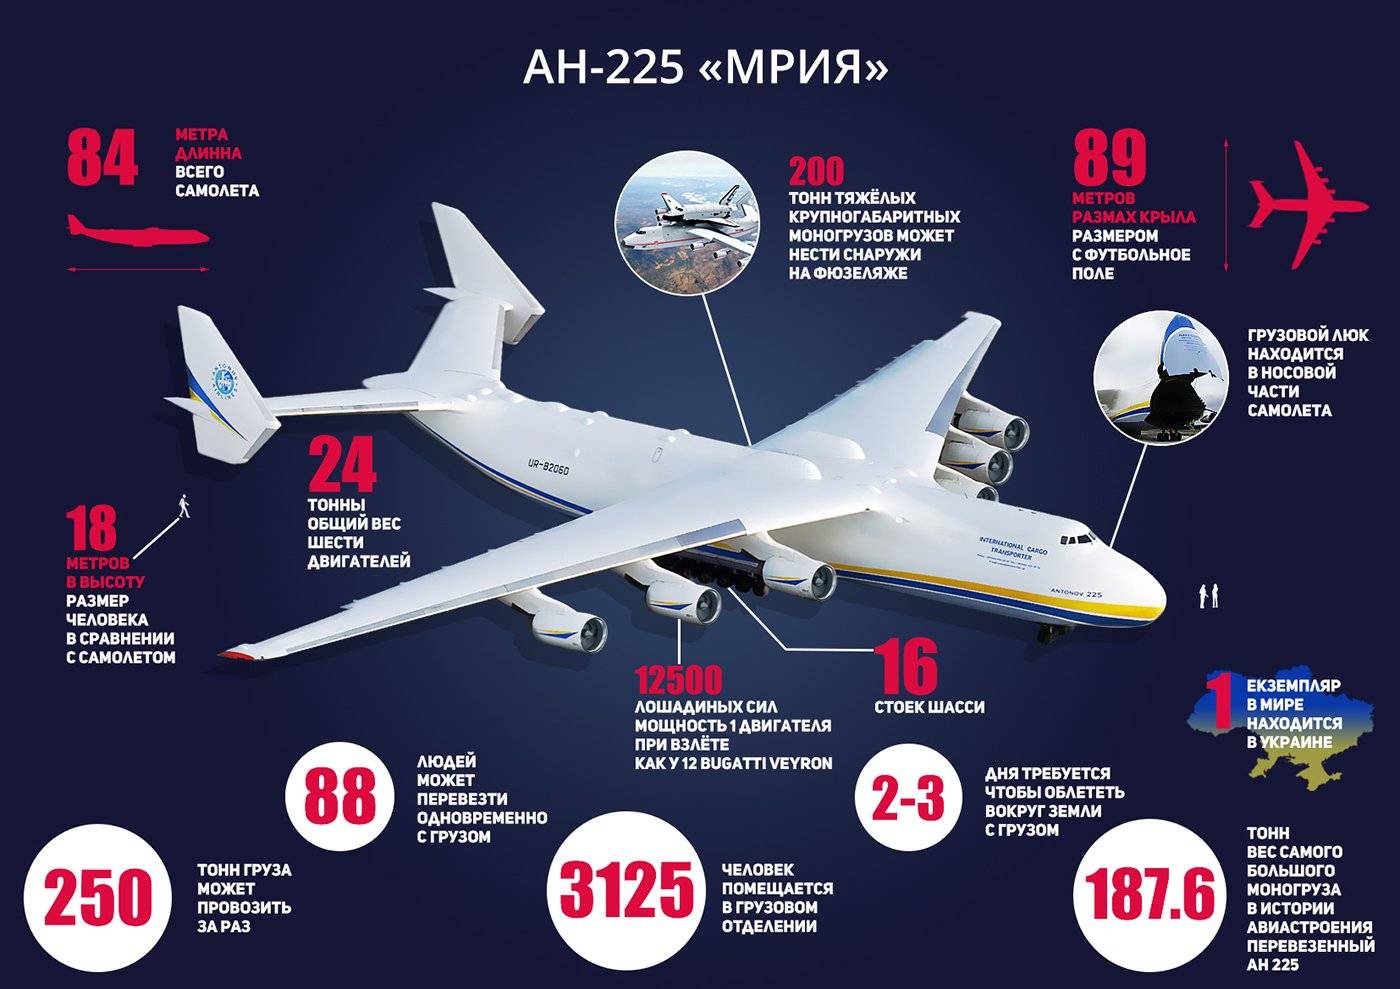 Theturull • какой же самолет ан-225 с б/н ur-82060 сейчас летает по миру??